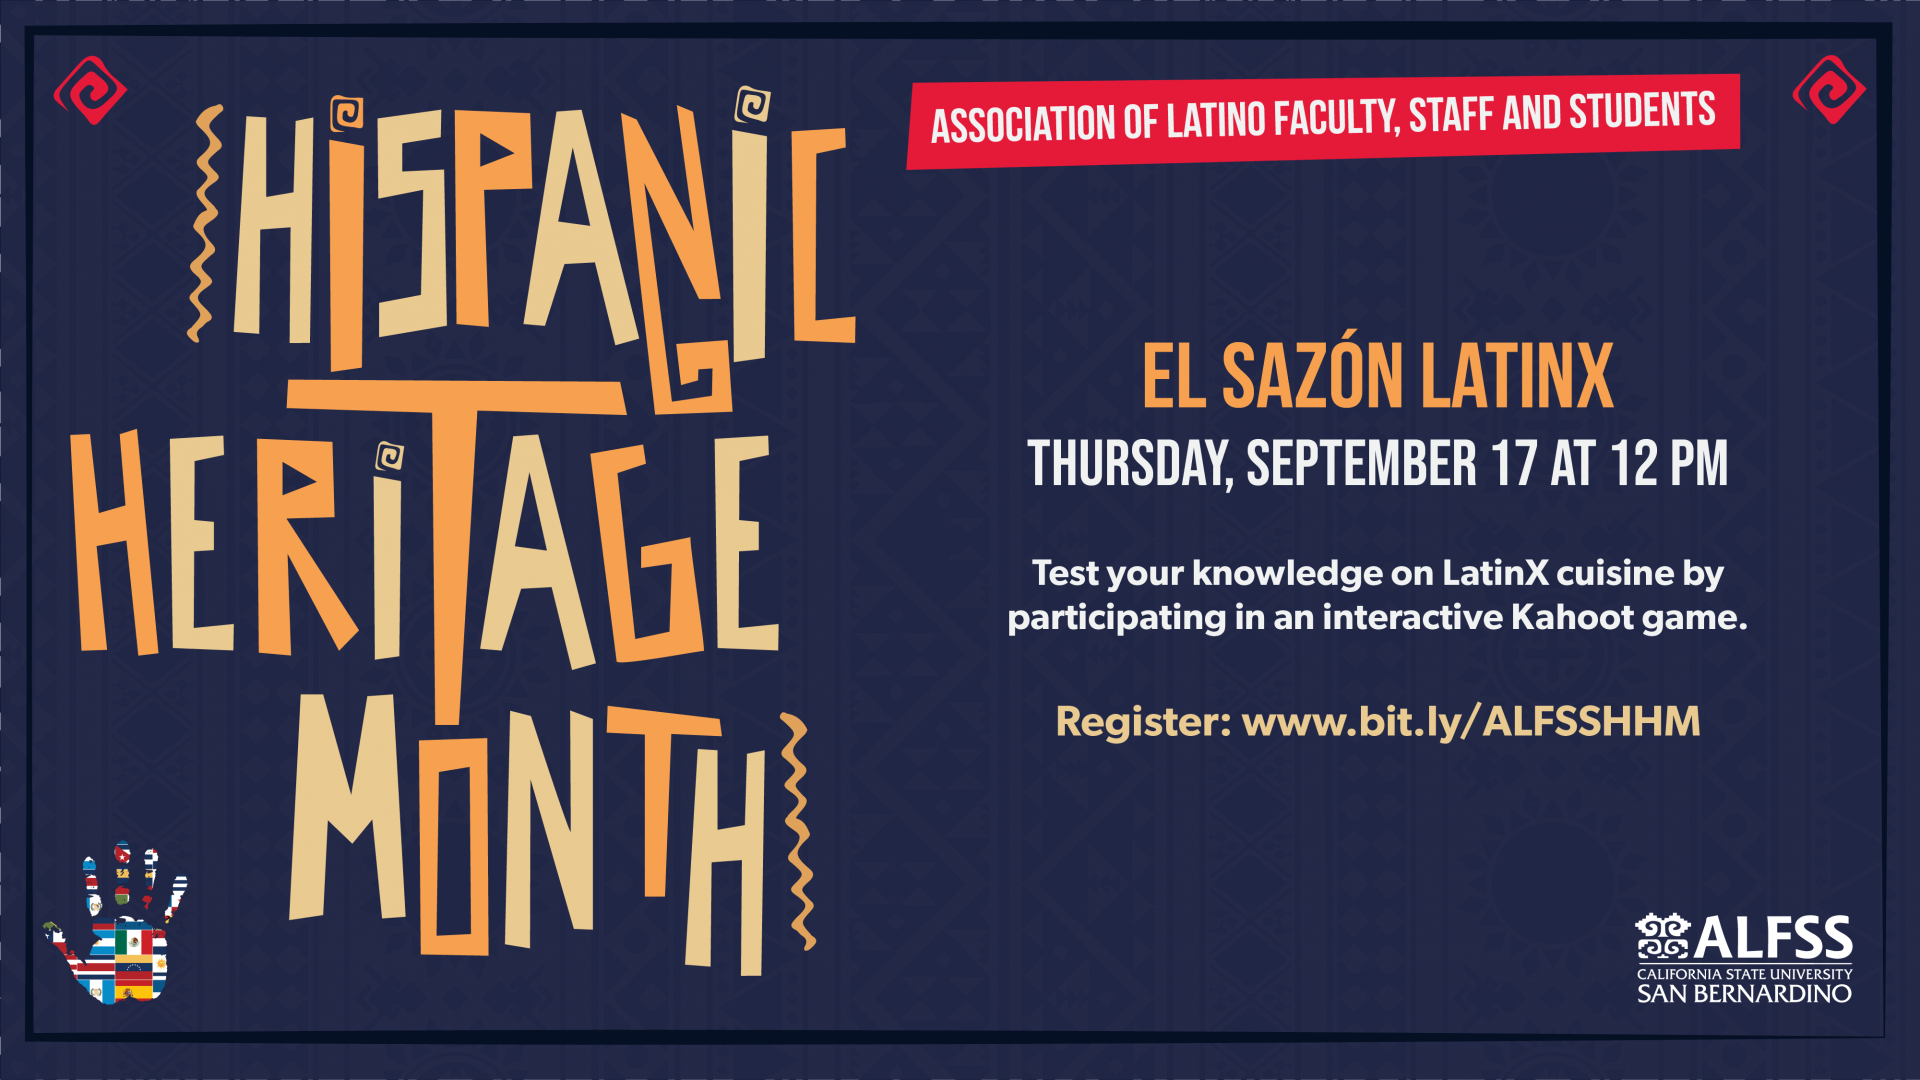 Flyer for El Sazon Latinx Event